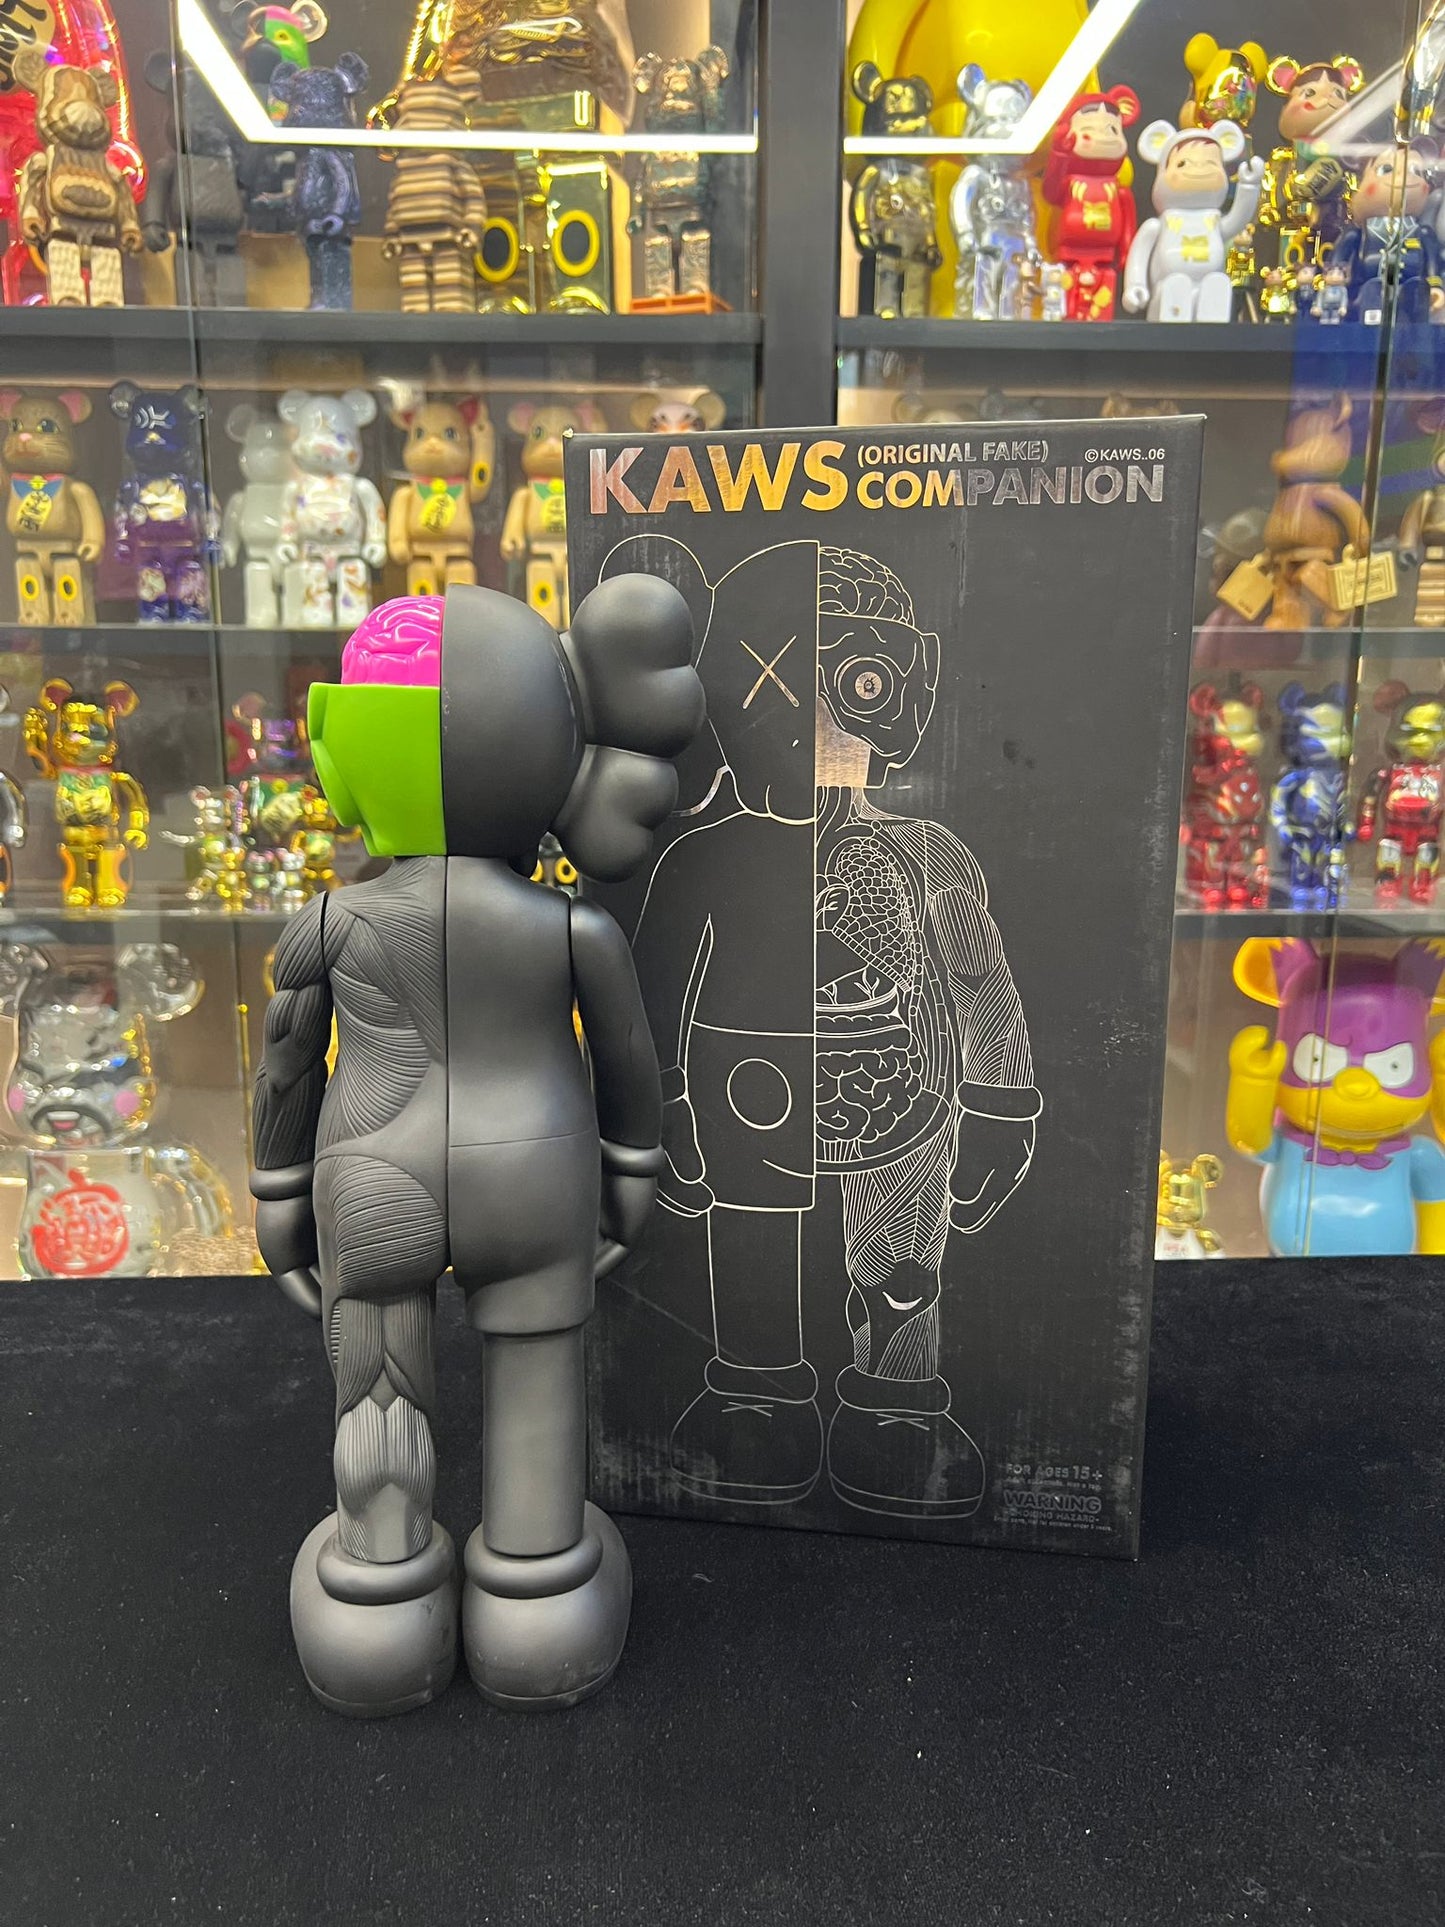 Kaws Companion (Original Fake) 2006 黑半解